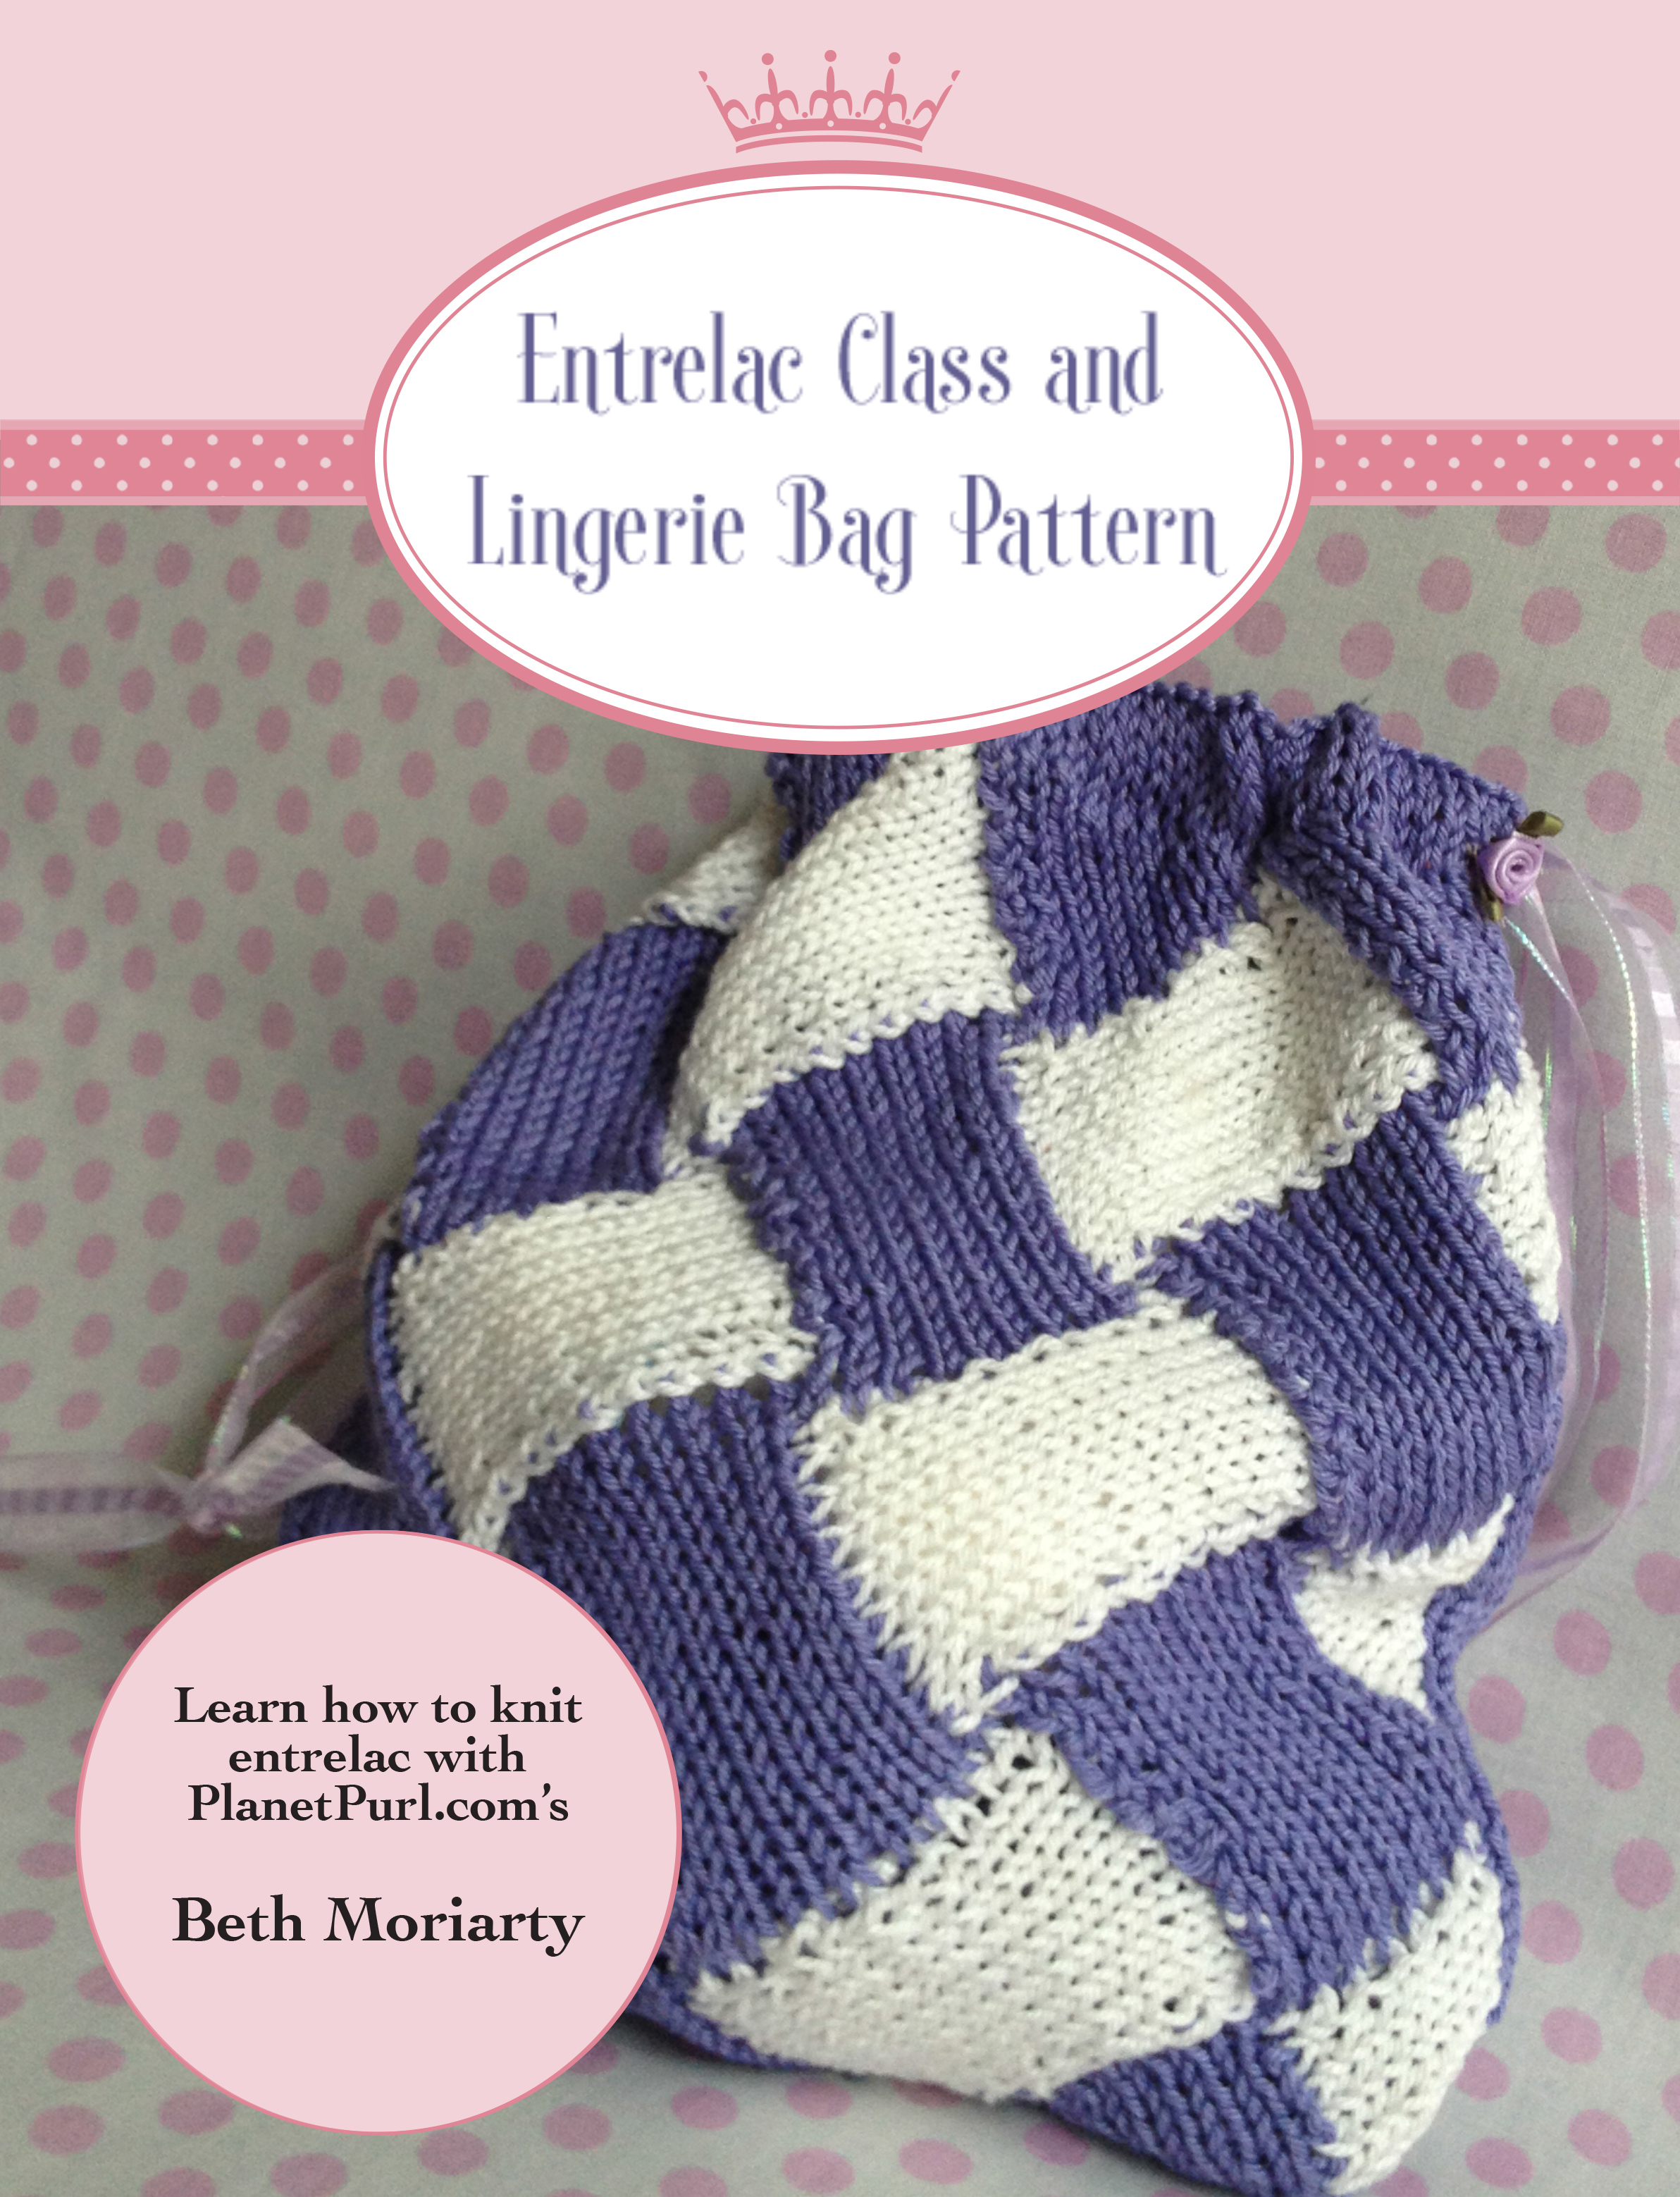 Crochet Lingerie Patterns Interactive Knitting Crochet Classes Purlqueen Patterns